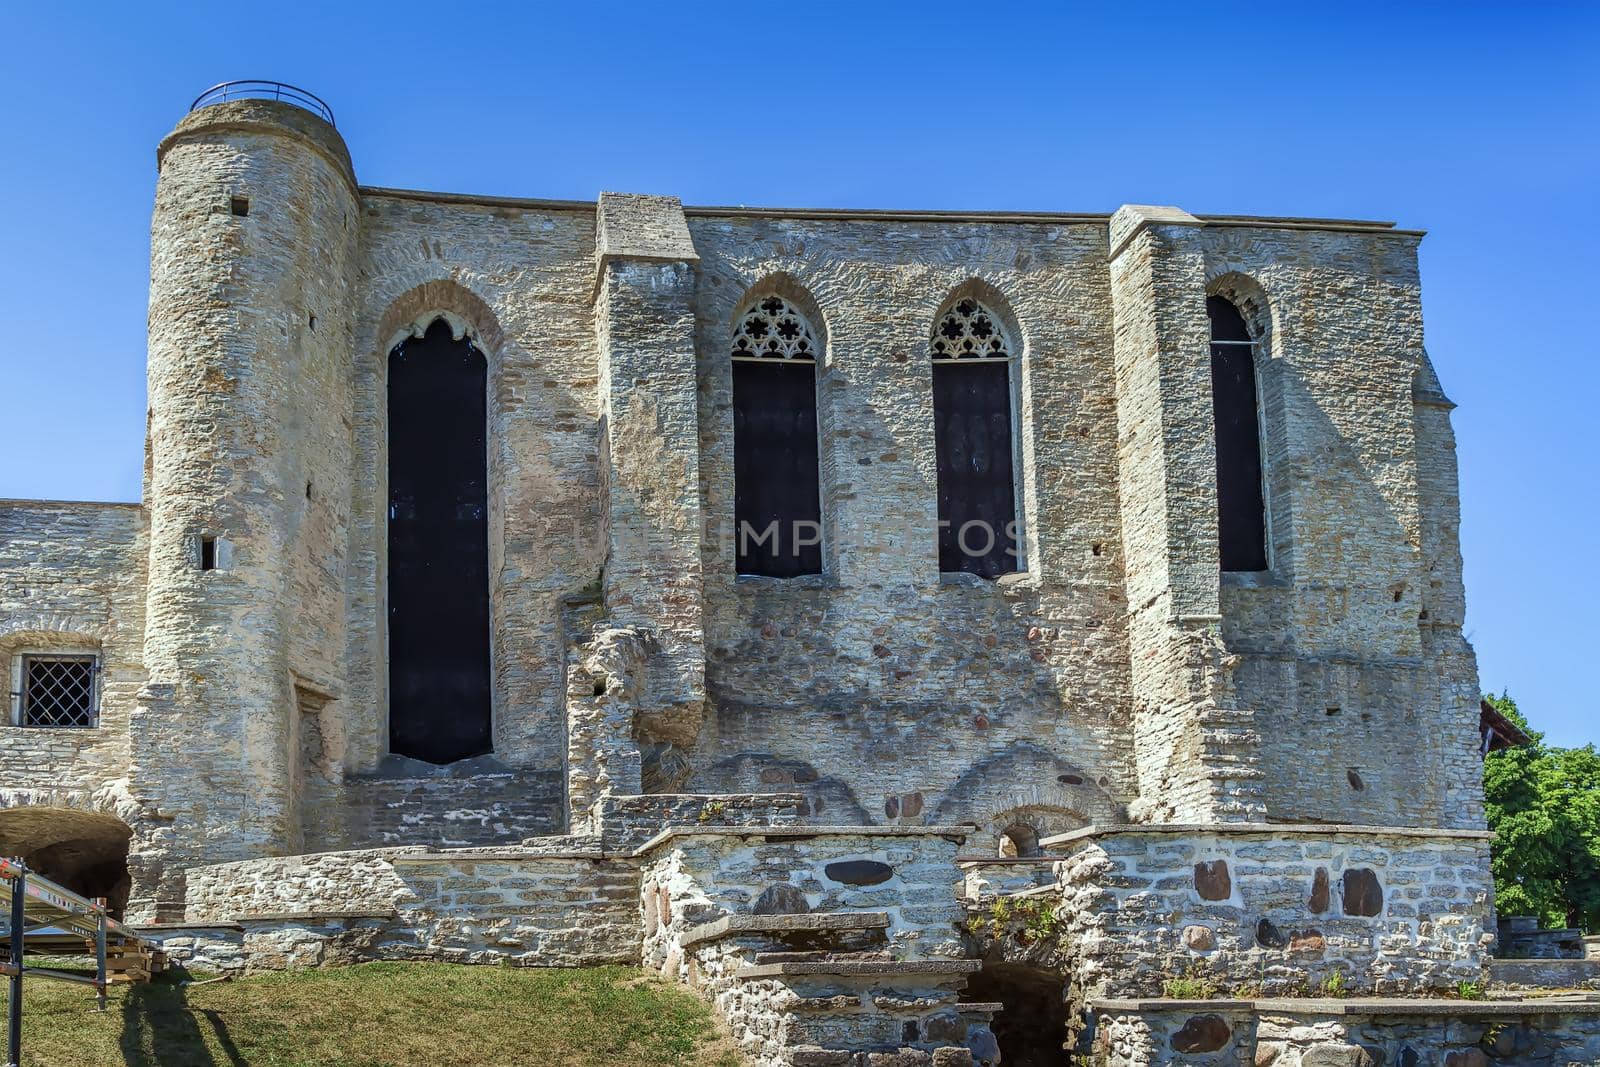 Pirita Convent was a monastery dedicated to St. Brigitta, located in the district of Pirita in Tallinn, Estonia